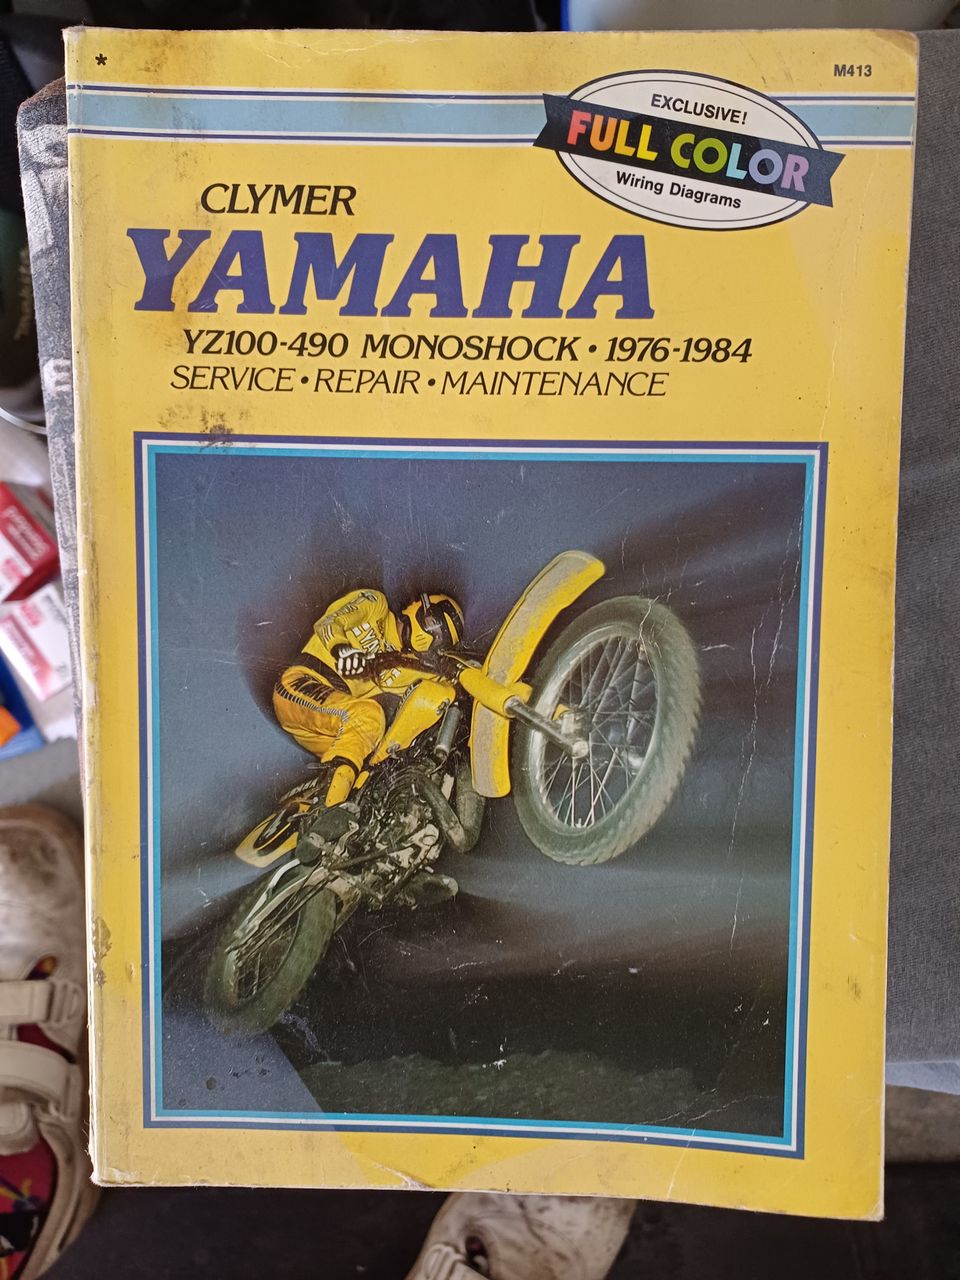 Yamaha YZ service manual